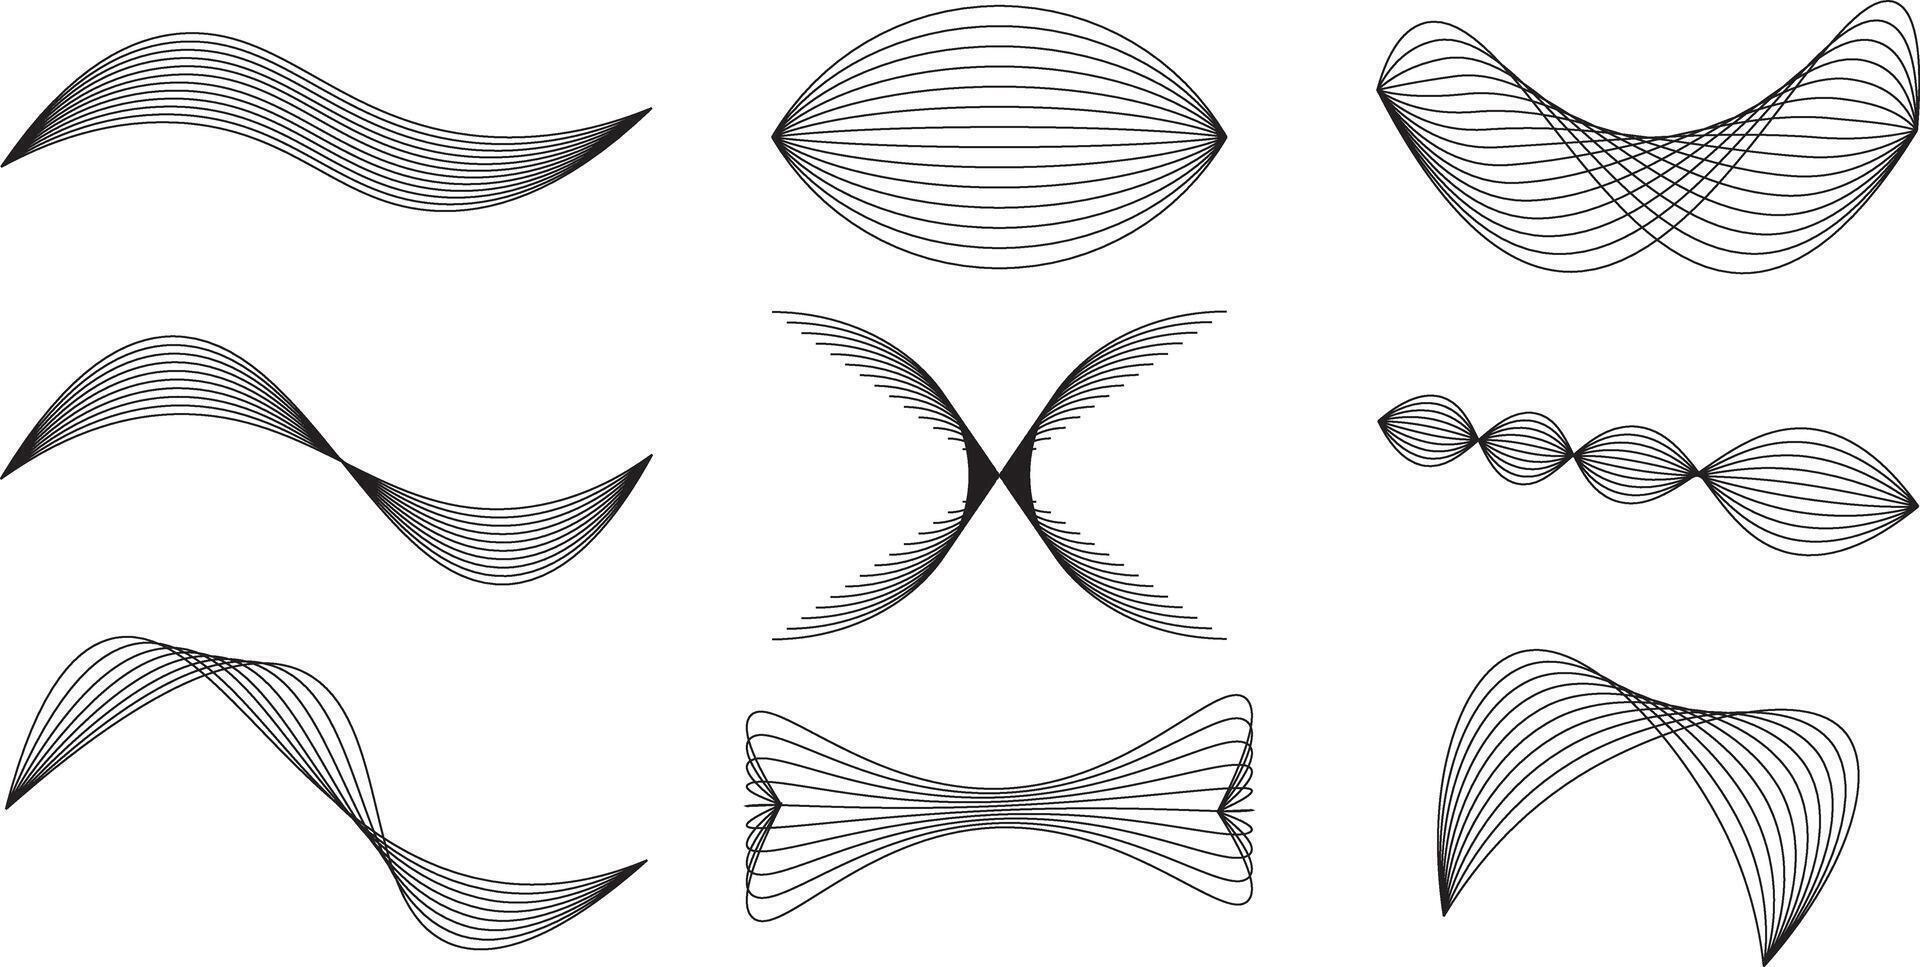 abstrakt modern klassisk Vinka linje konst med redigerbar stroke vektor